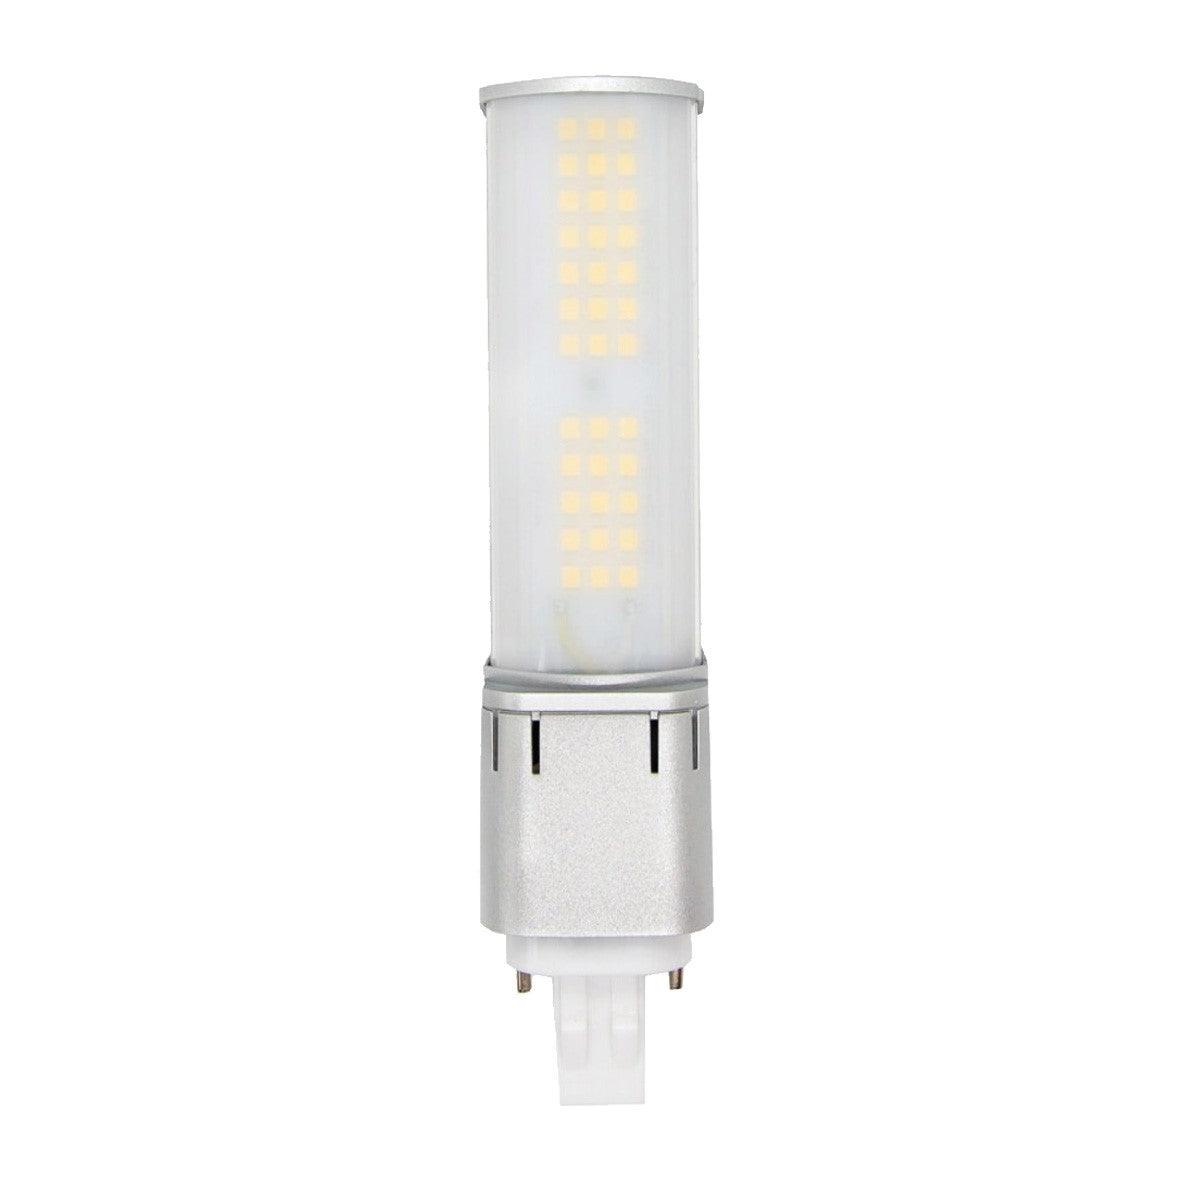 2 pin PL LED Bulb, 7 Watt 870 Lumens, 3500K, Horizontal, Replaces 13W CFL, GX23 Base-2, Direct Or Bypass